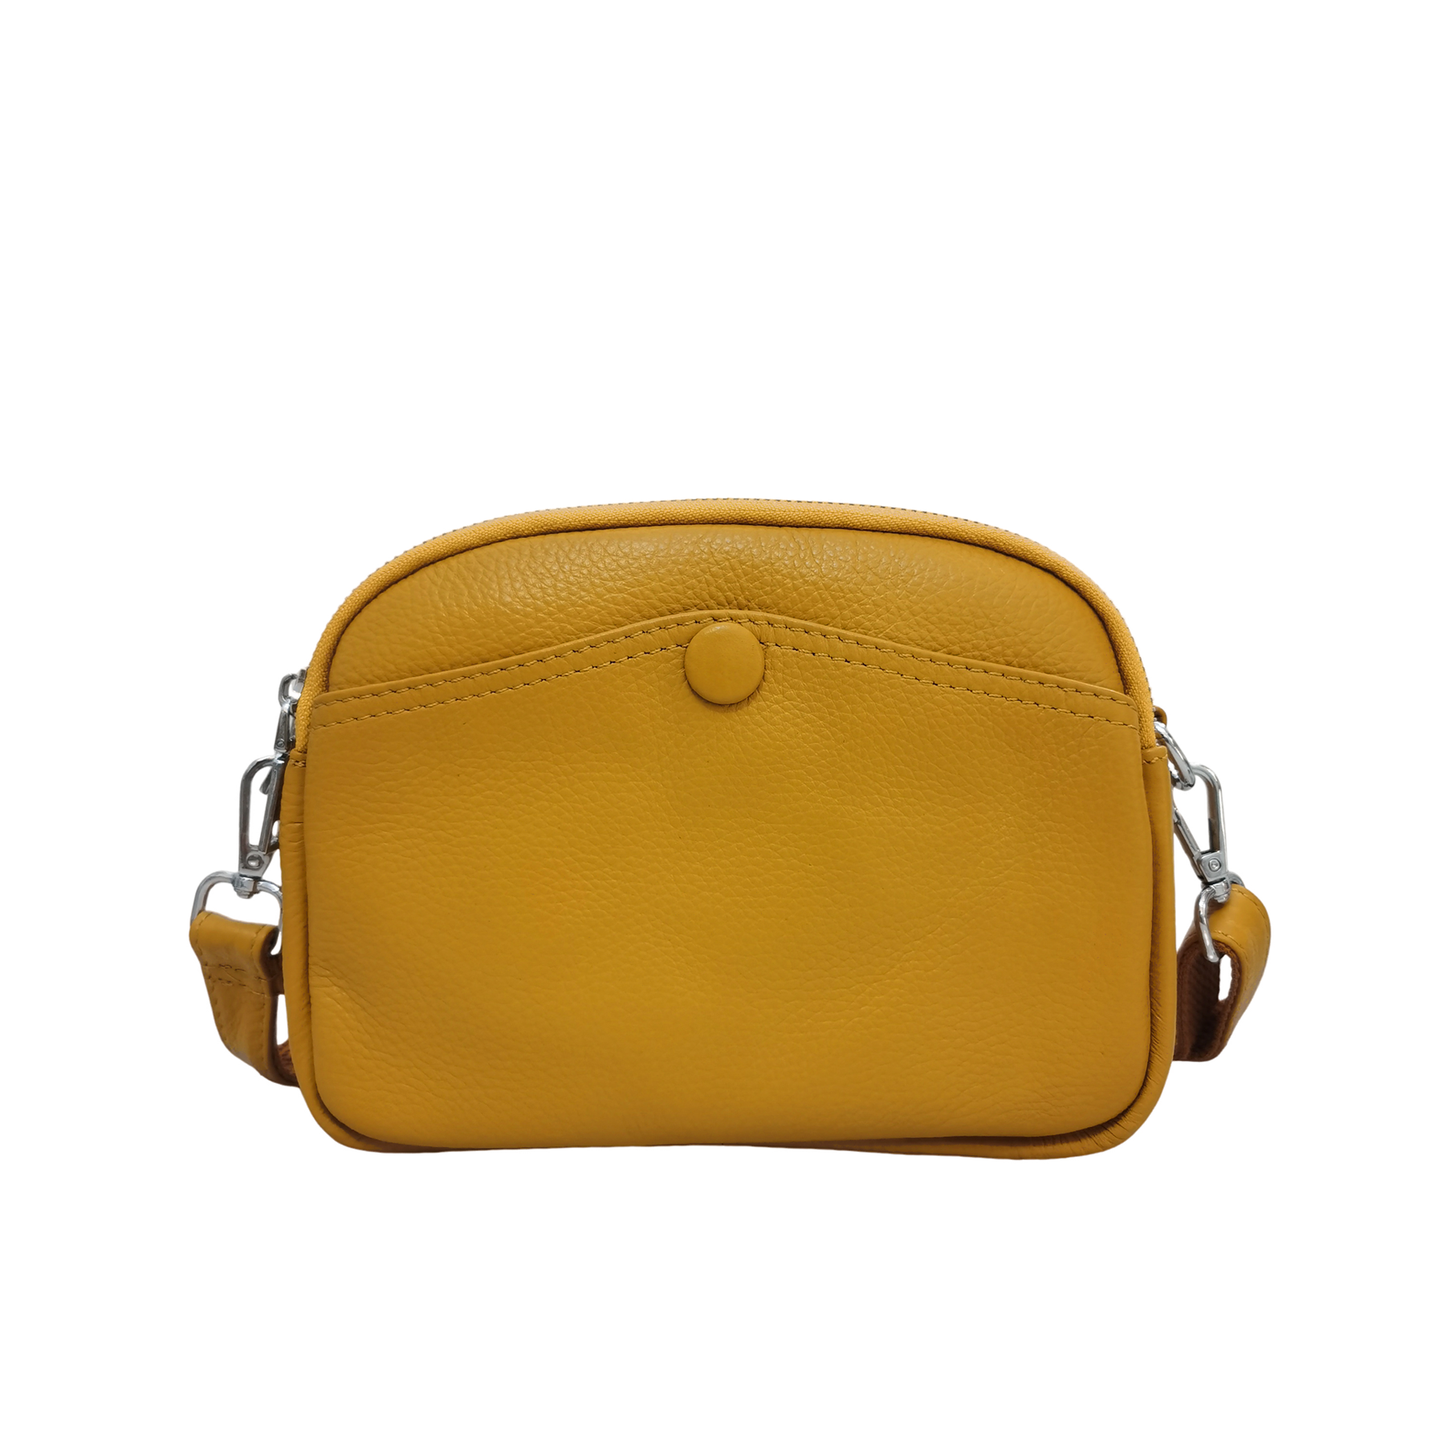 Women's genuine cowhide leather handbag Murca button design